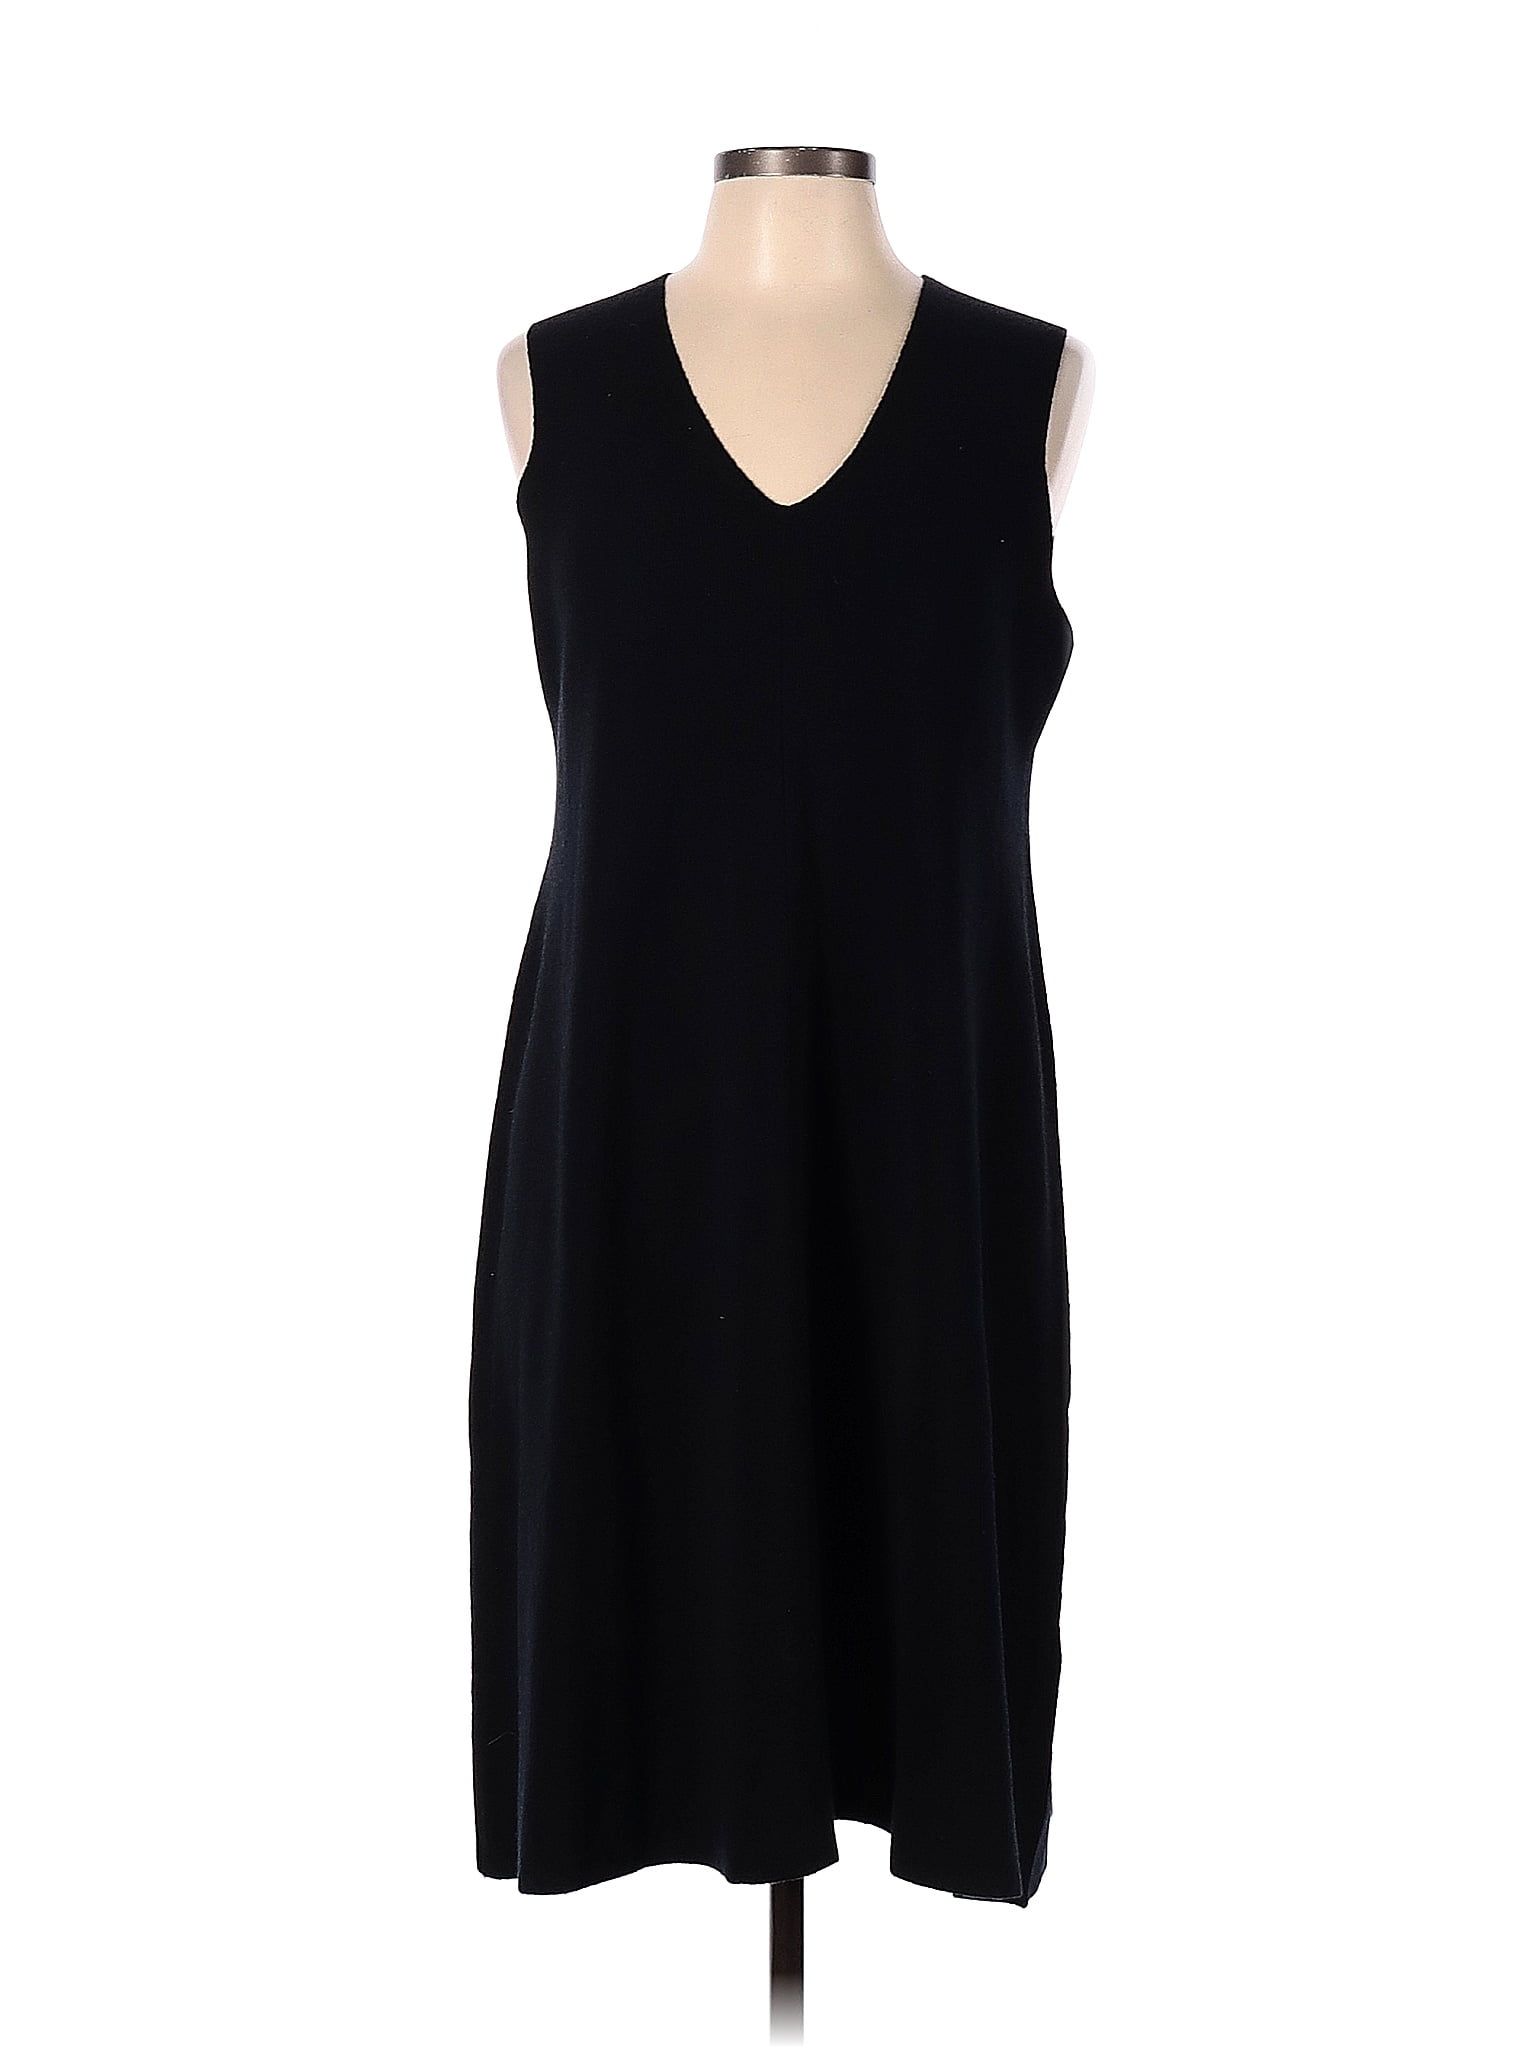 Eileen Fisher Black Casual Dress Size L (Petite) - 77% off | thredUP